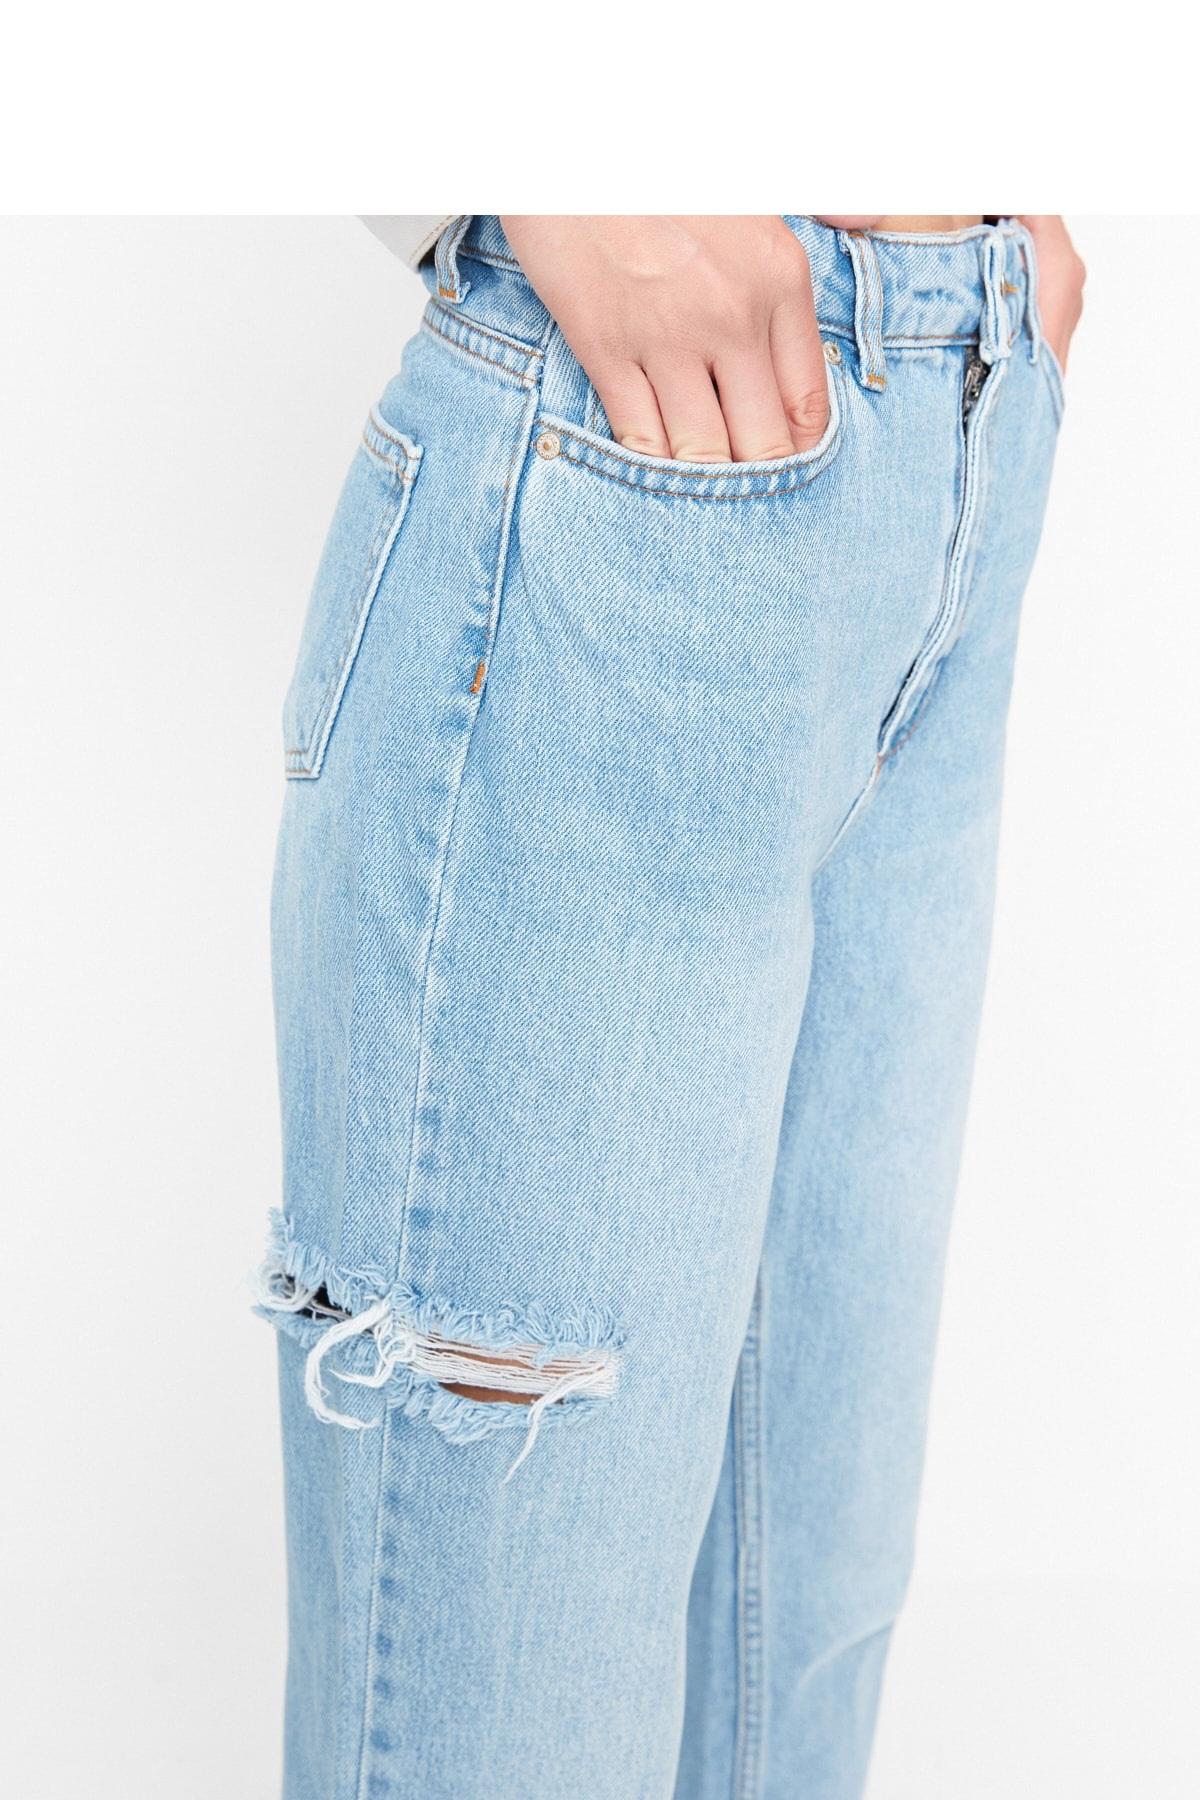 شلوار جین زاپ دار زنانه کد.1030